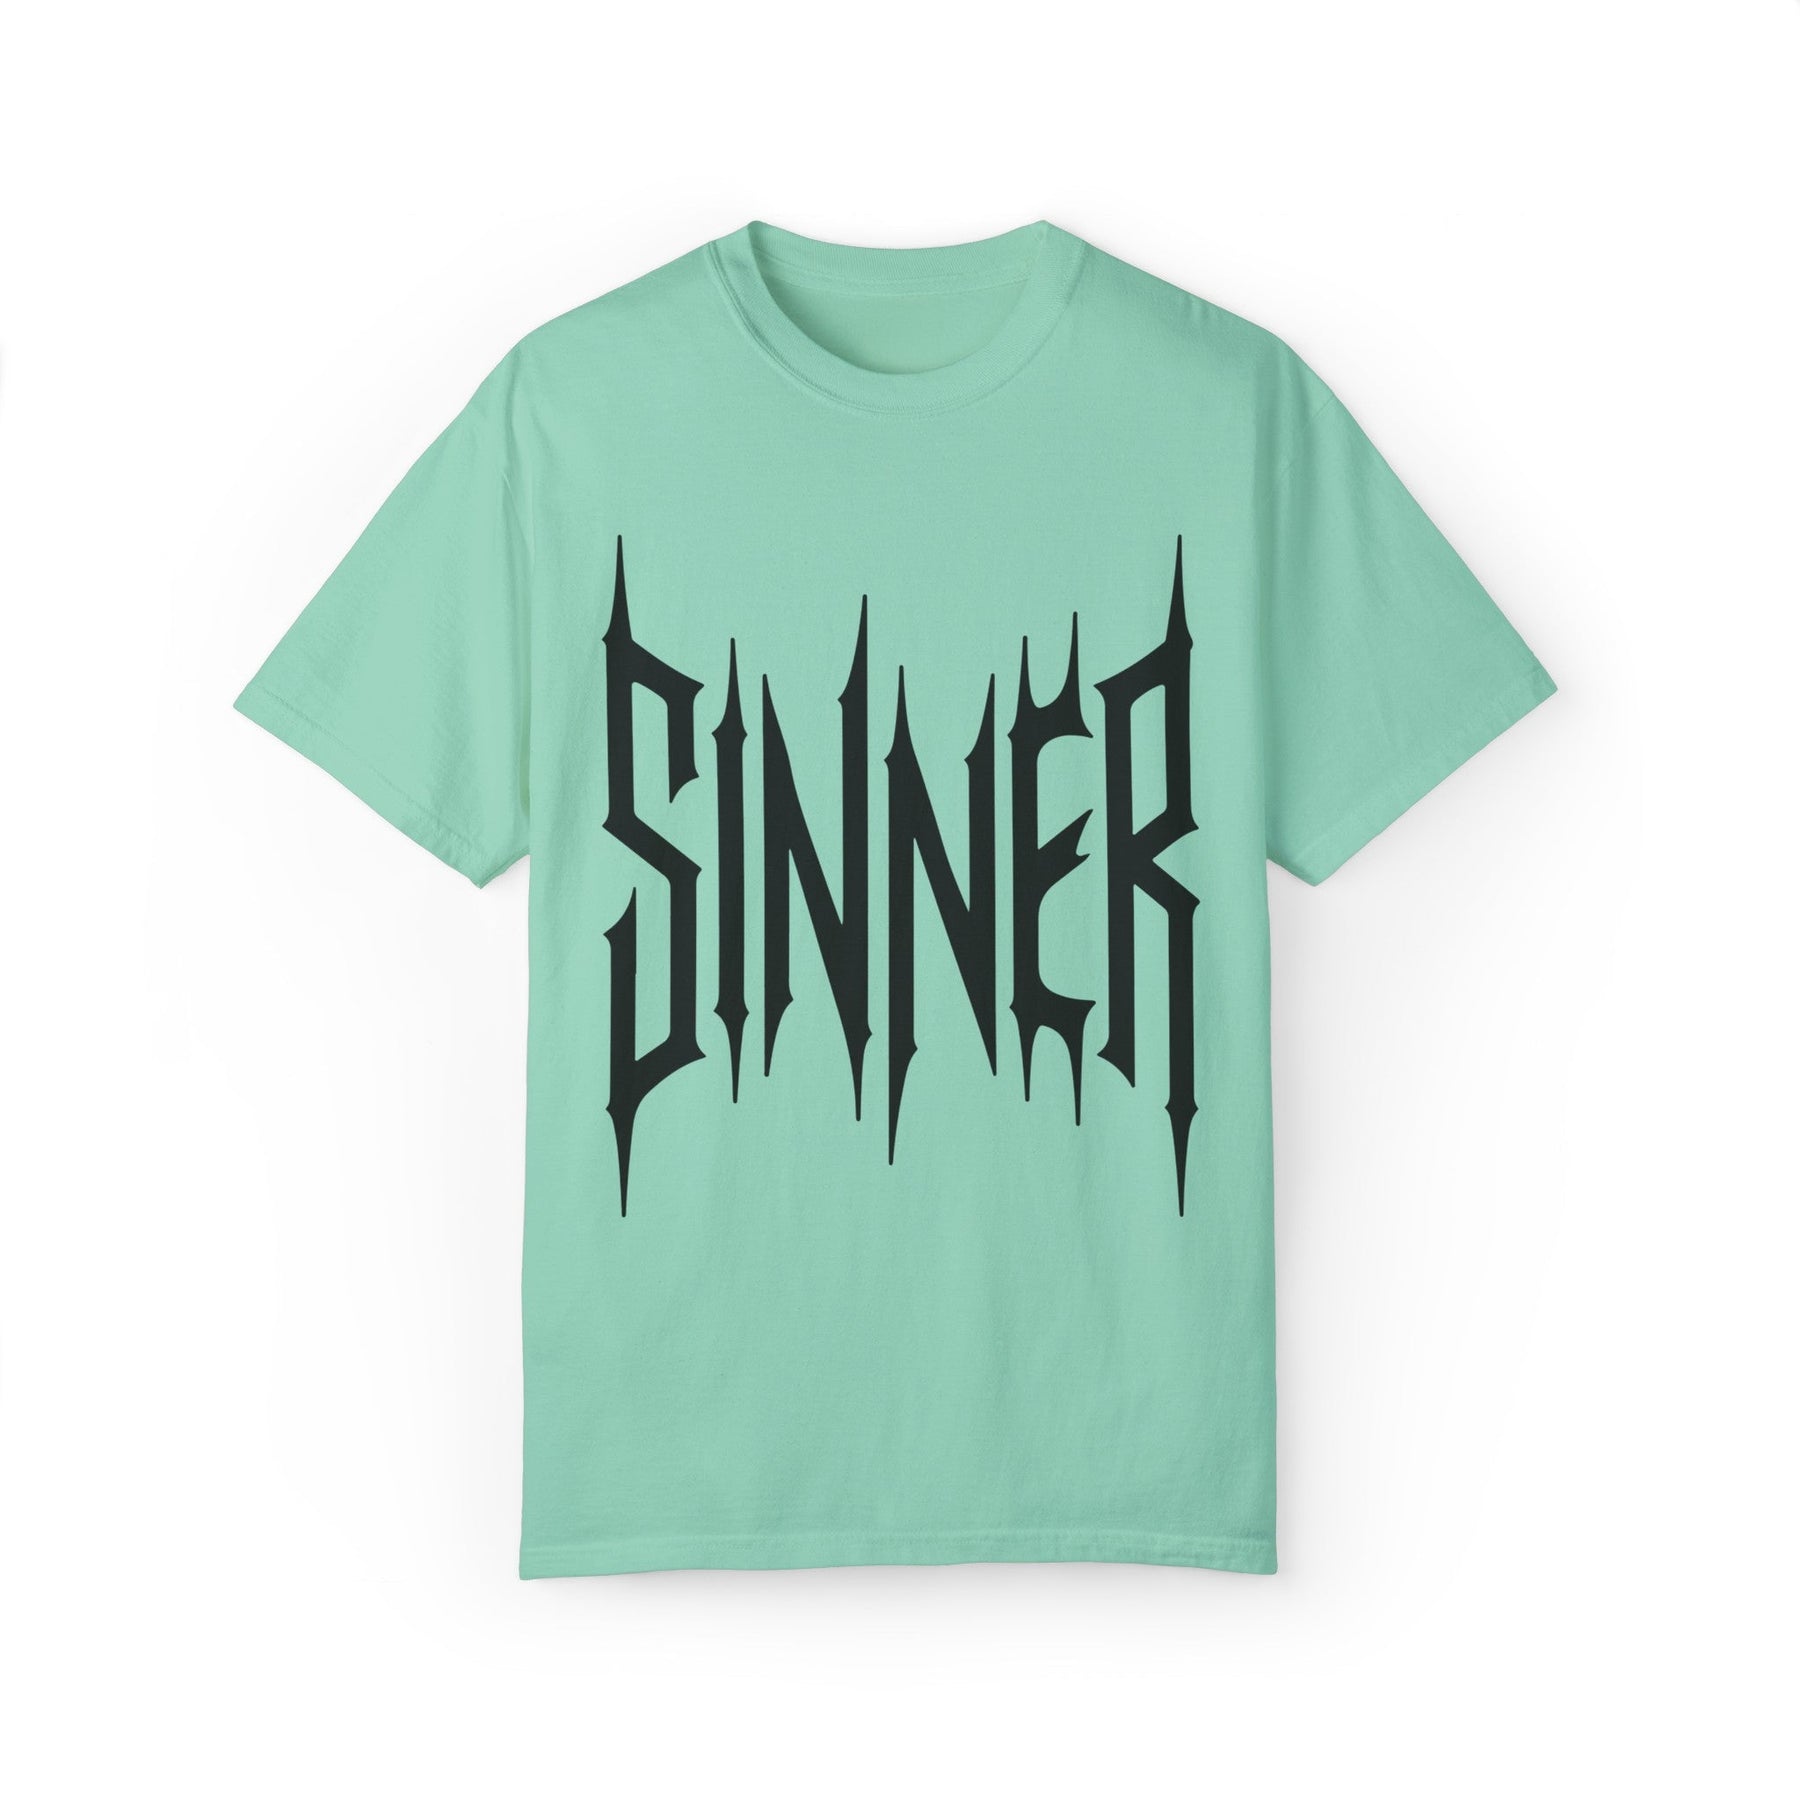 Sinner Oversized Beefy Tee - Goth Cloth Co.T - Shirt93721855385513441323